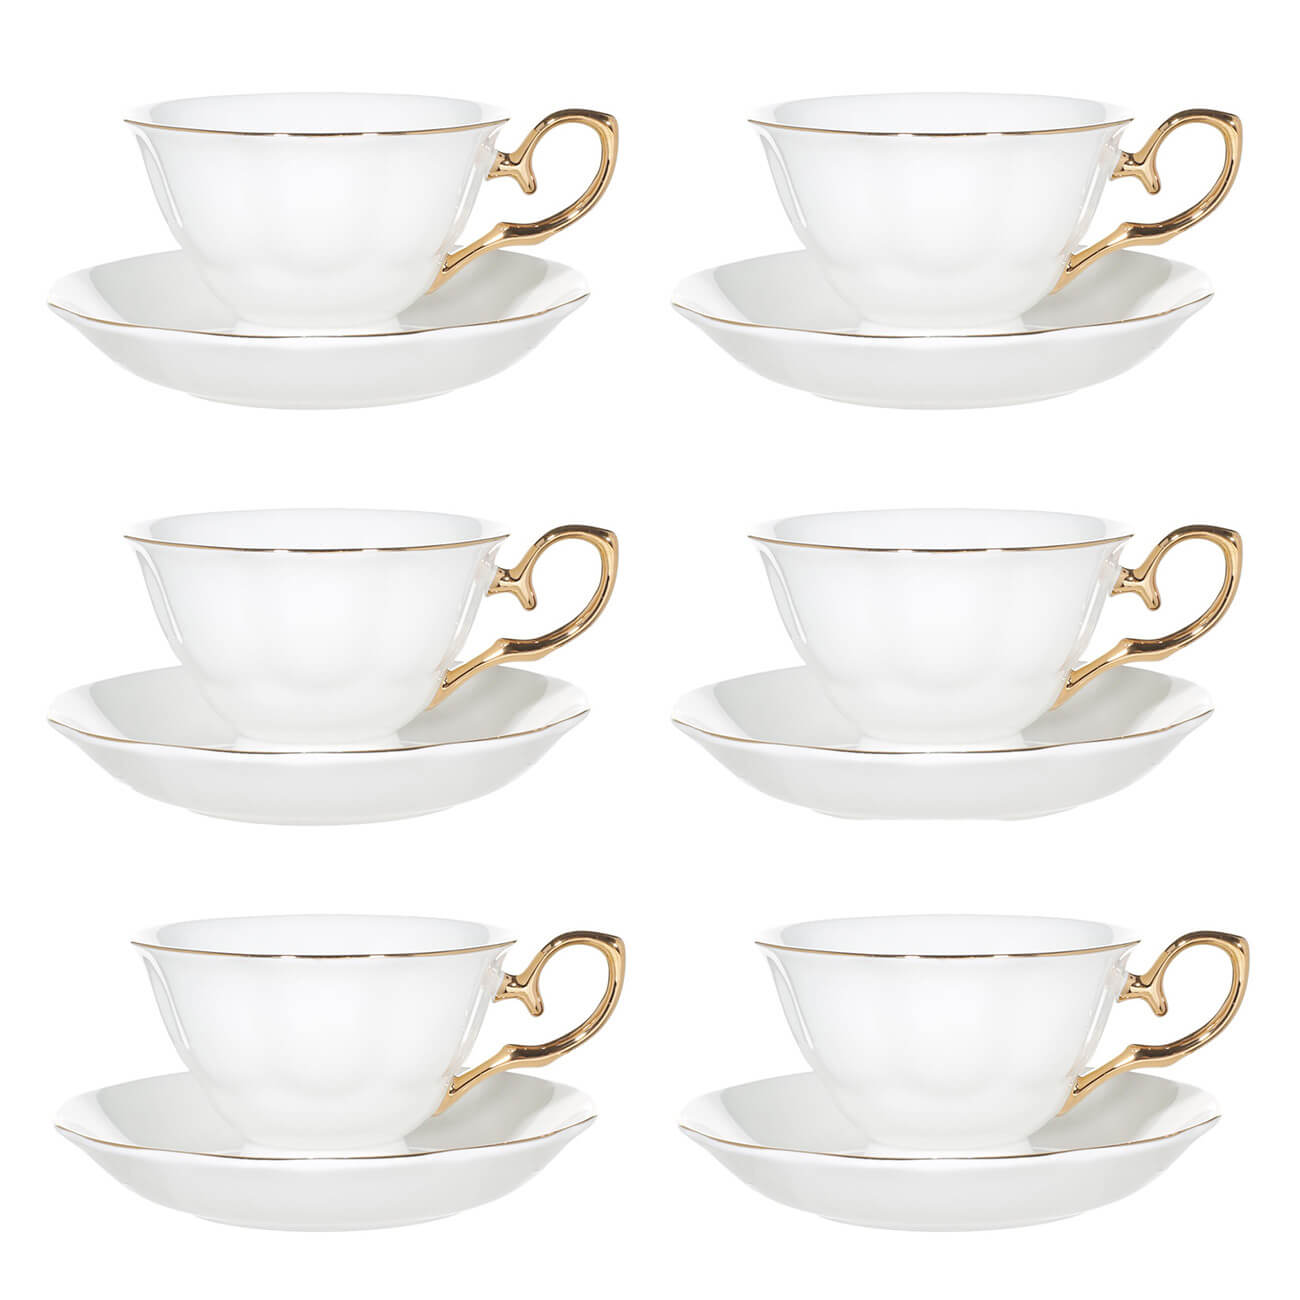 Пара чайная, 6 перс, 12 пр, 180 мл, фарфор F, бело-золотистая, Premium Gold чашка чайная tudor royal circle 200 мл